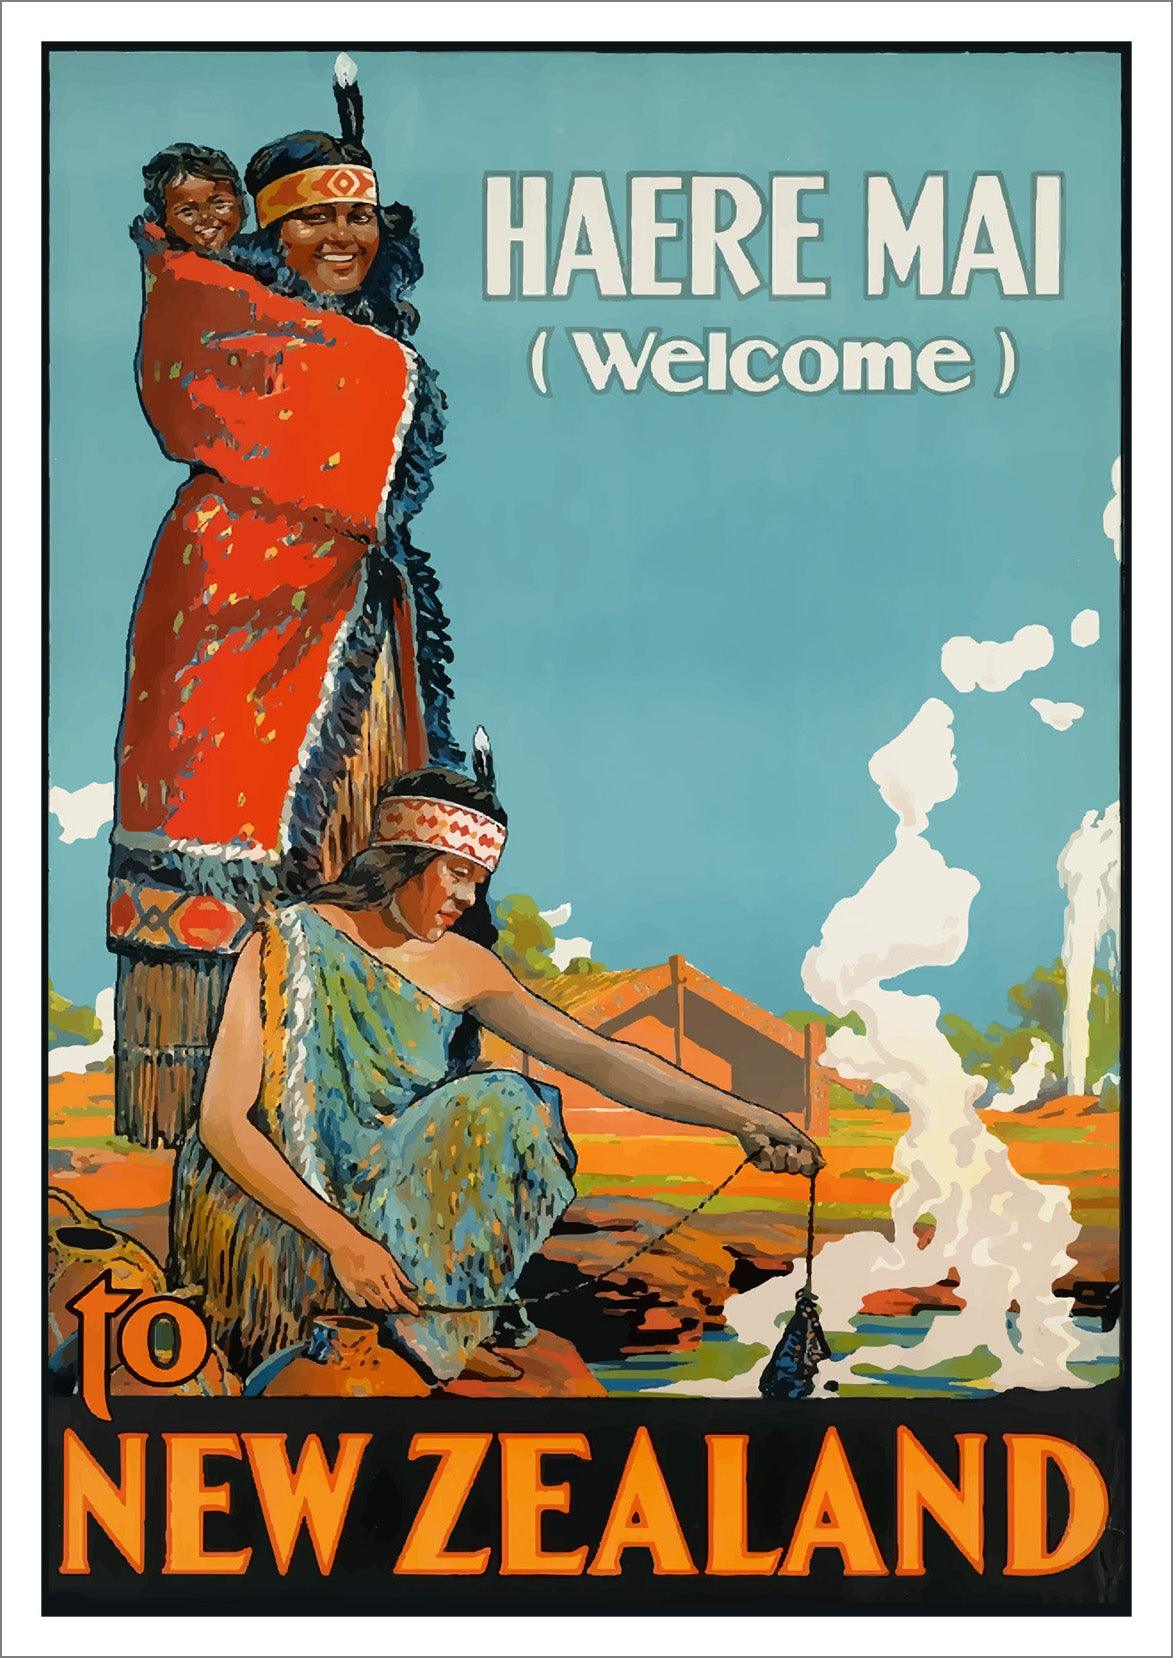 MAORI WELCOME POSTER: Vintage New Zealand Haere Mai Travel Print - Pimlico Prints